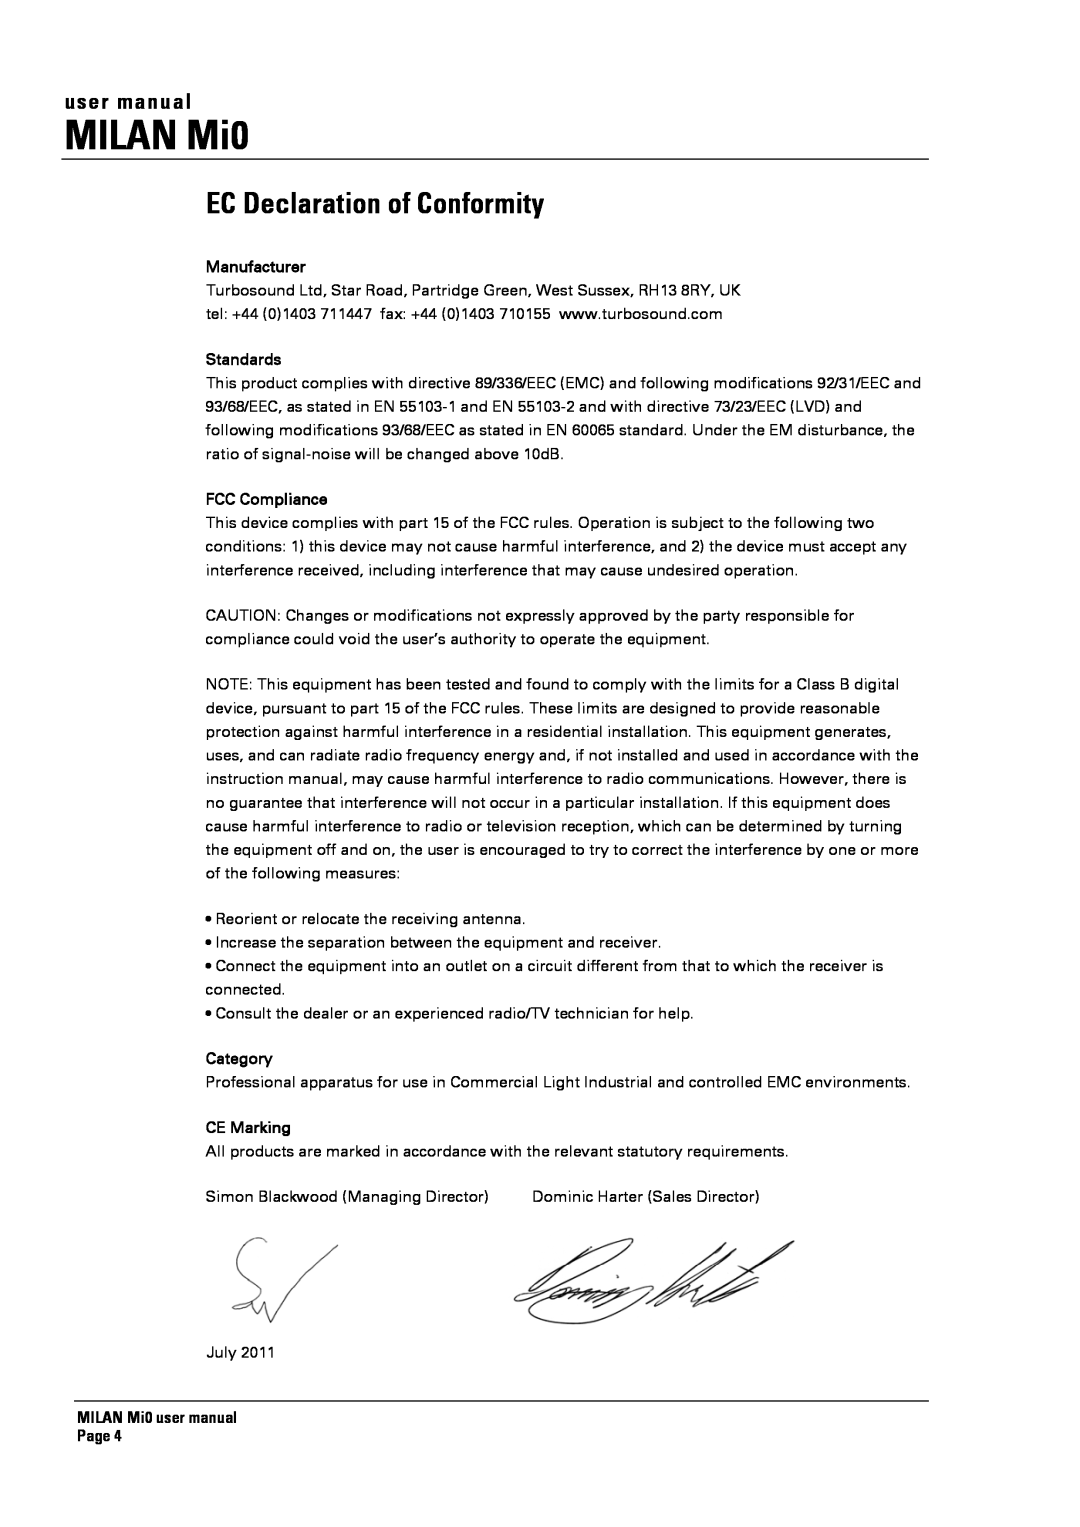 Turbosound Milan Mi0 manual EC Declaration of Conformity, Manufacturer, Standards, FCC Compliance, Category, CE Marking 